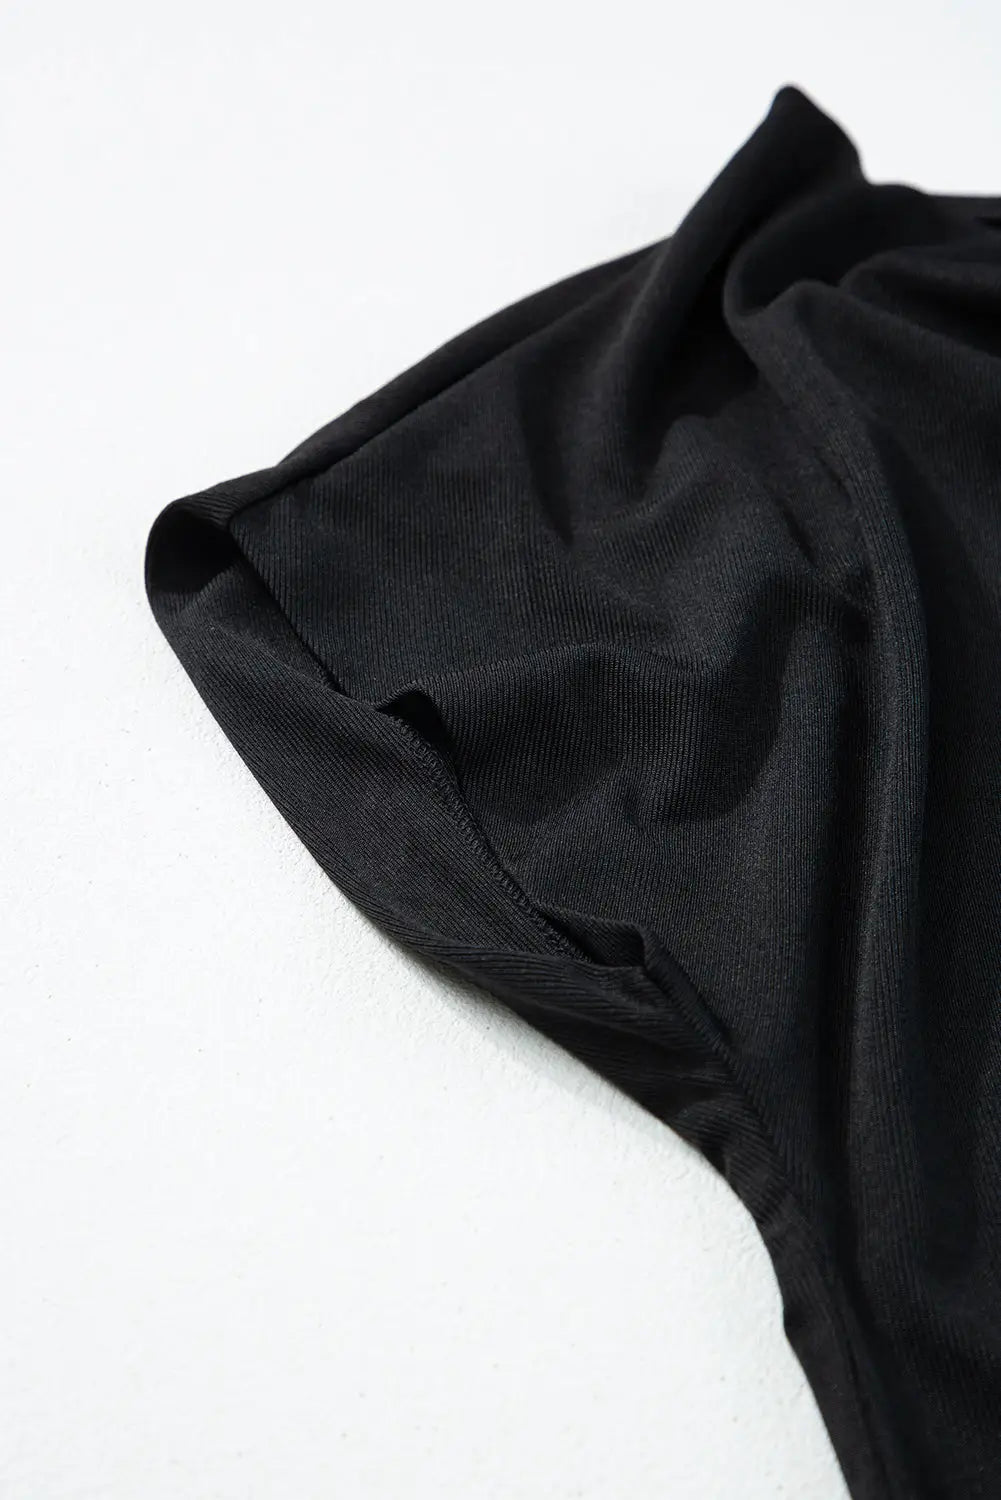 Black cowl neck bat sleeve t shirt - tops & tees